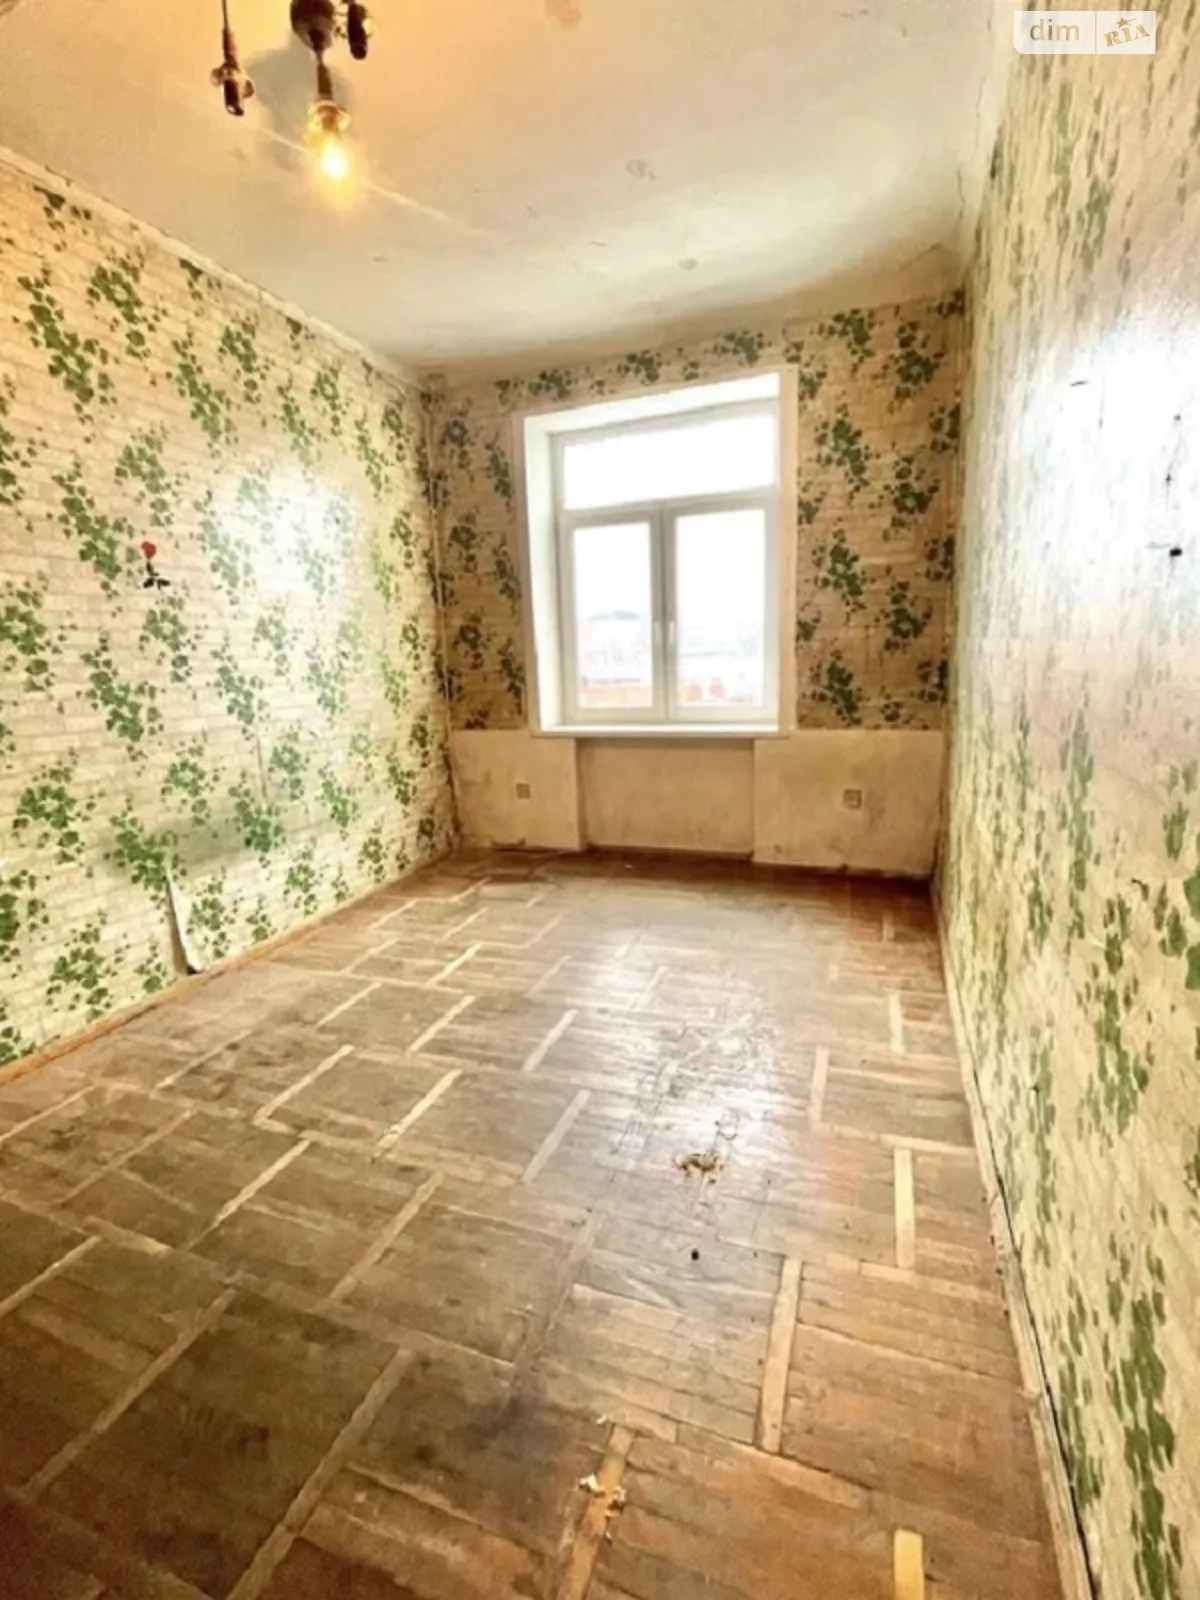 Продается комната 35.2 кв. м в Харькове - фото 2